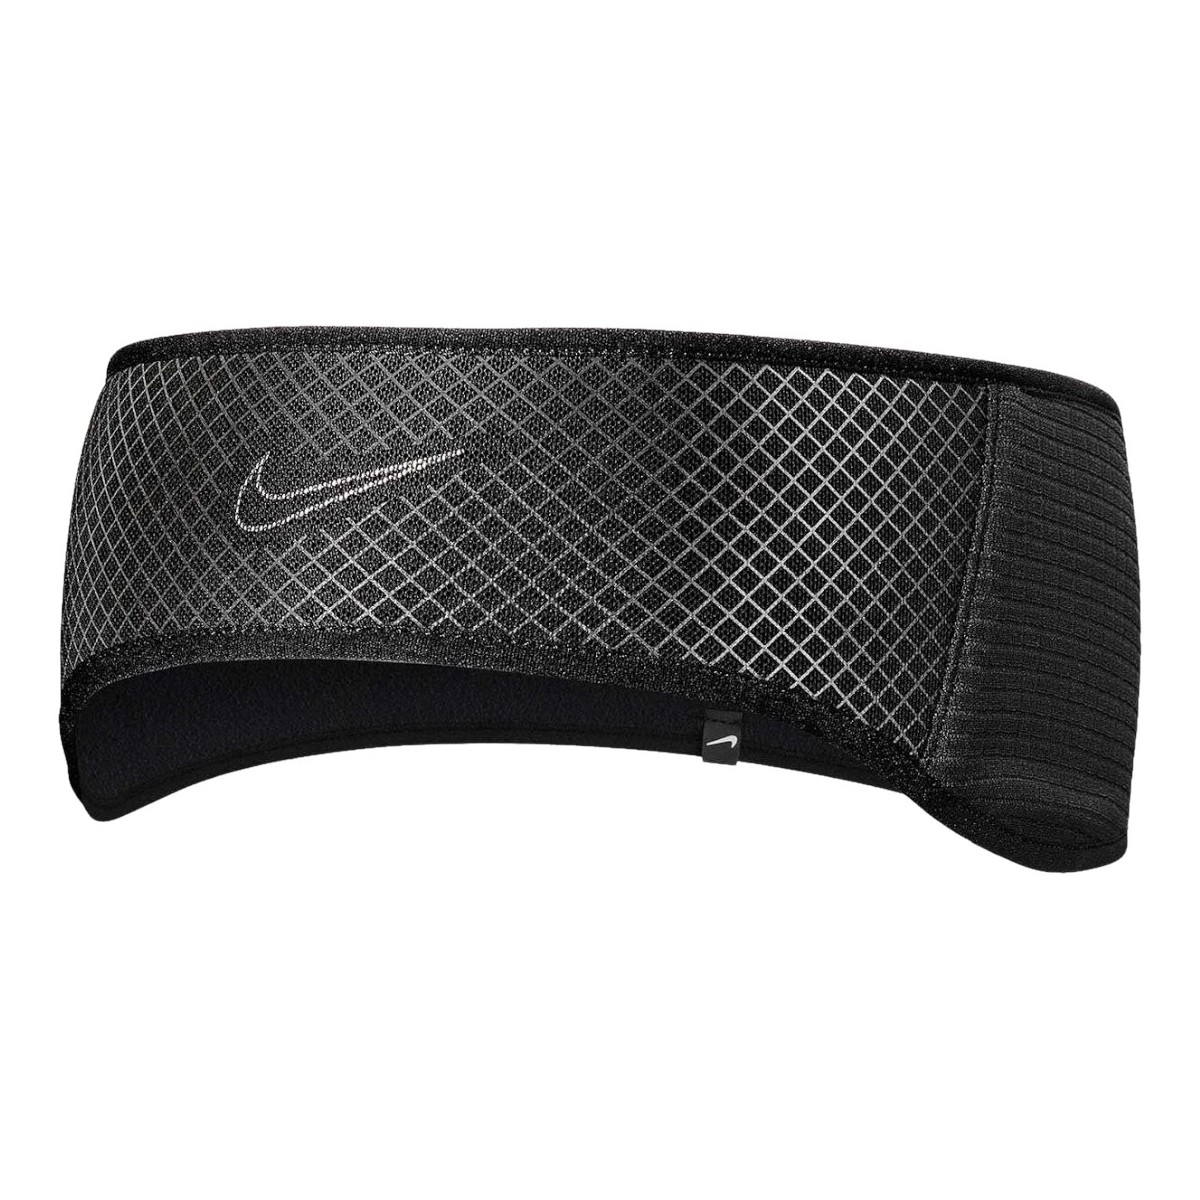 Accessories Herre Sportstilbehør Nike Running Men Headband Sort